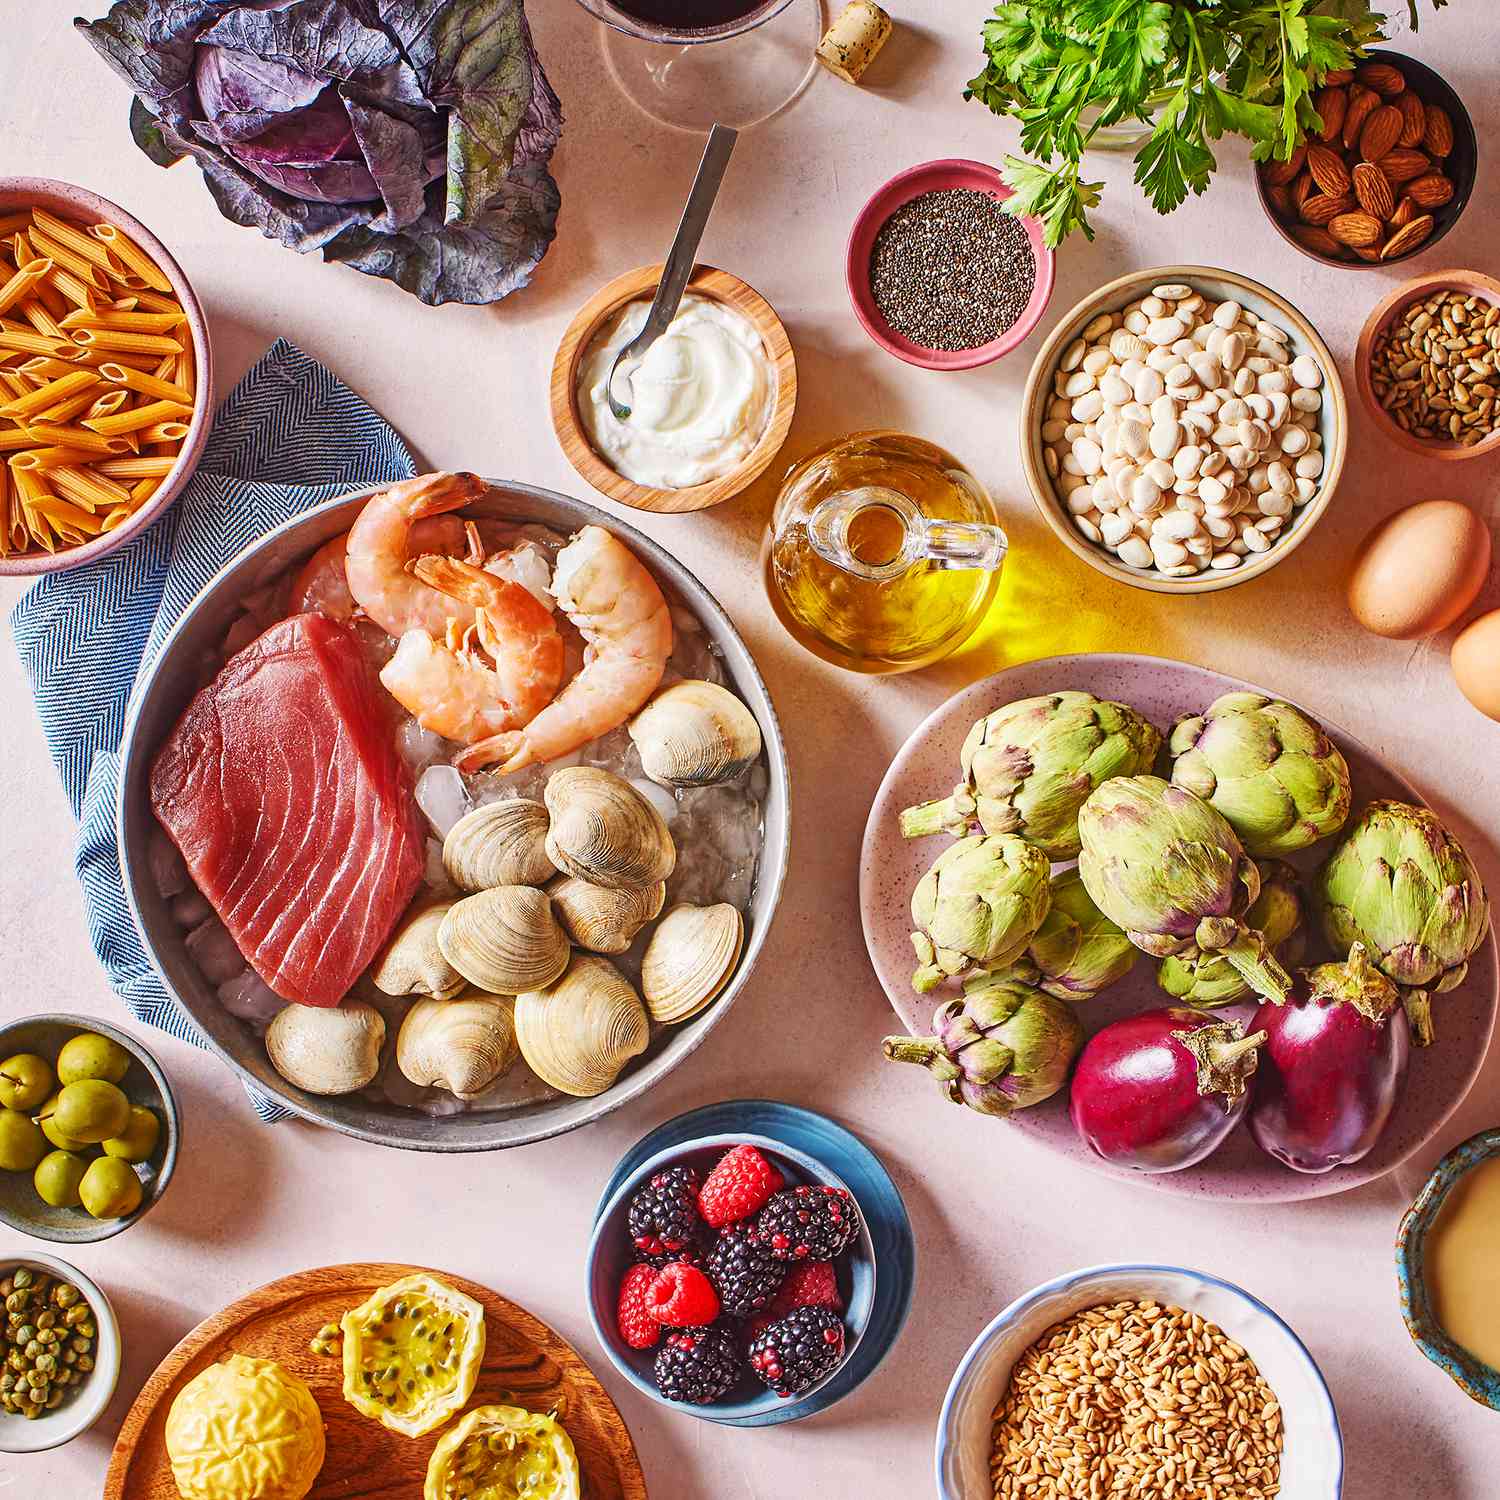 a group of Mediterranean Diet foods that include steak, shrimp, berries, artichokes, yogurt, seeds, pasta, nuts, eggs, and olive oil